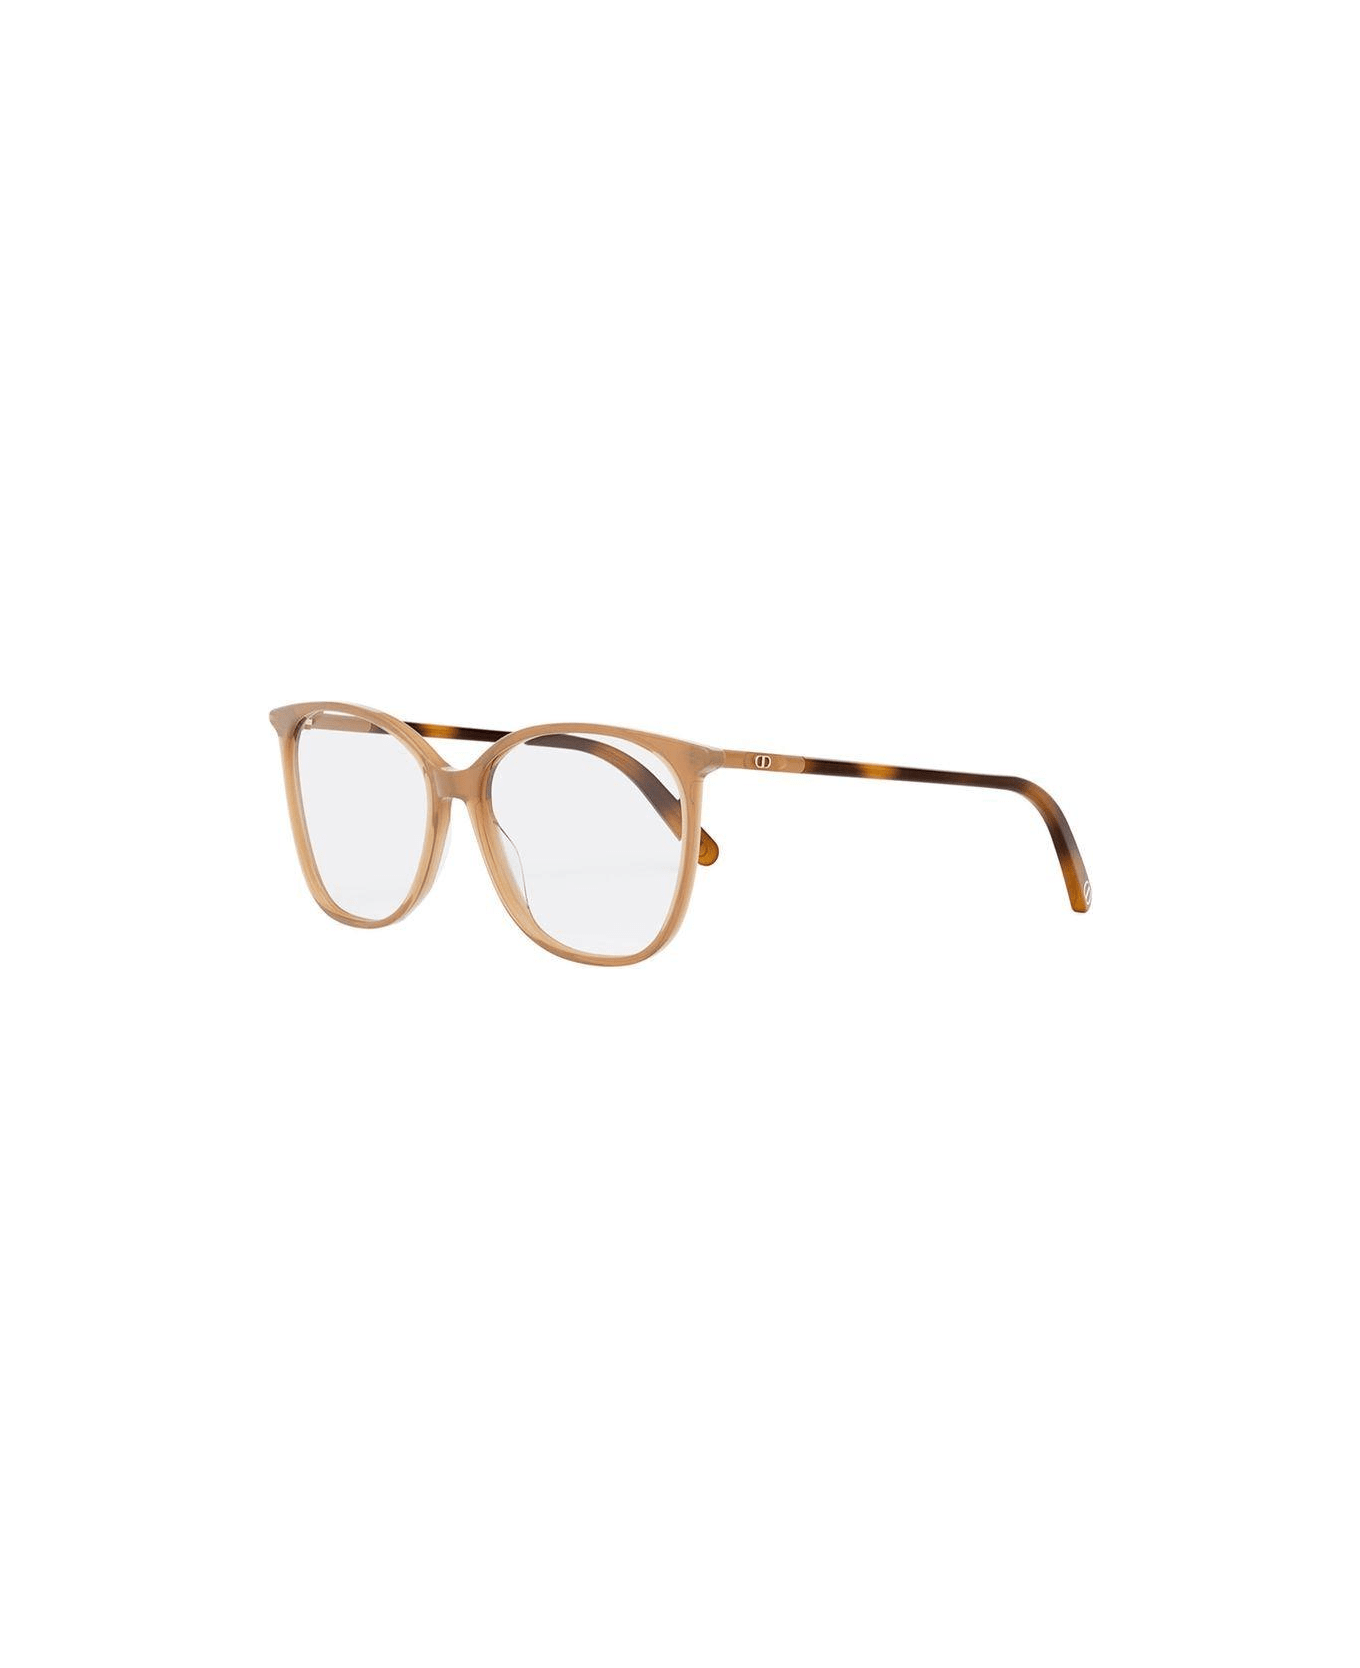 Dior Eyewear Butterfly Frame Glasses - 7000